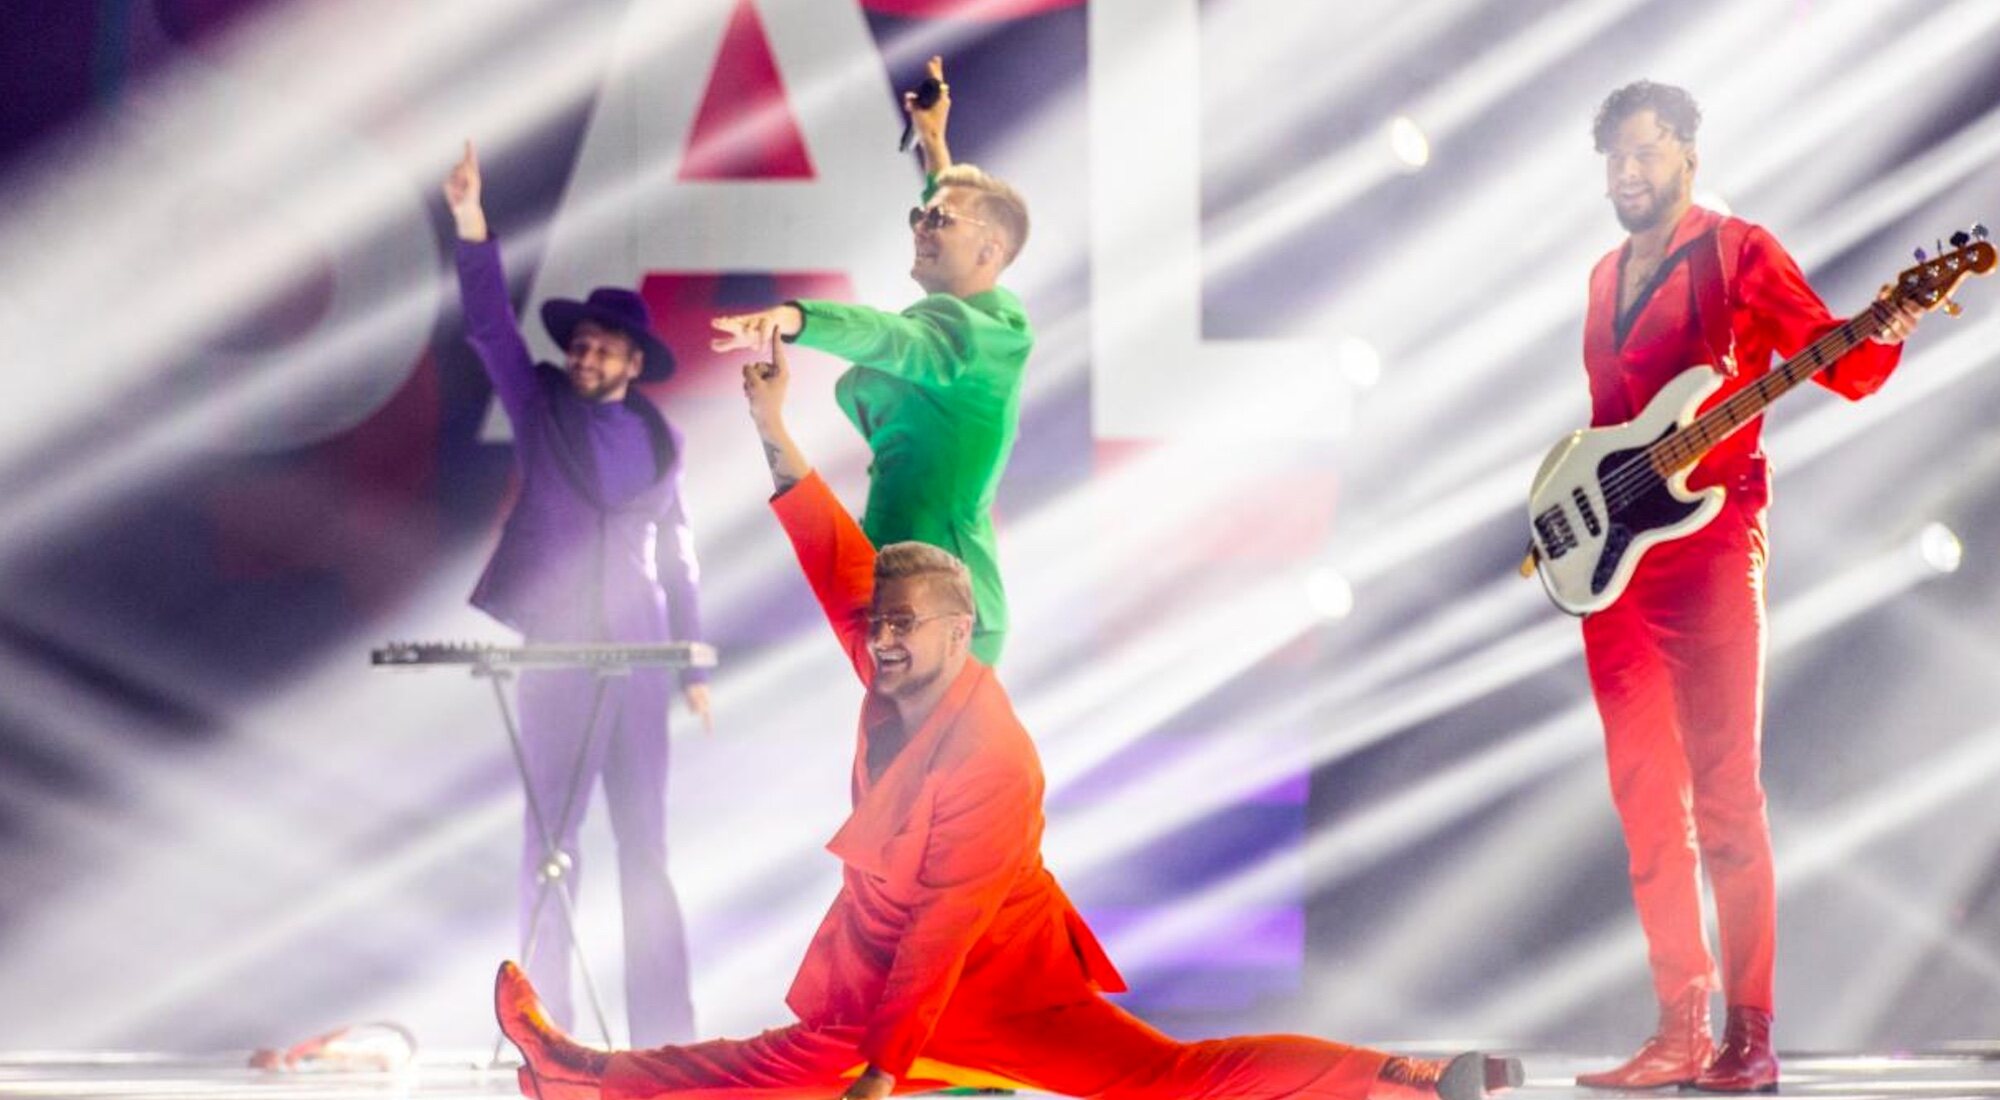 Citi Zeni, representantes de Letonia, interpretando "Eat Your Salad" en el segundo pase de ensayos para Eurovisión 2022